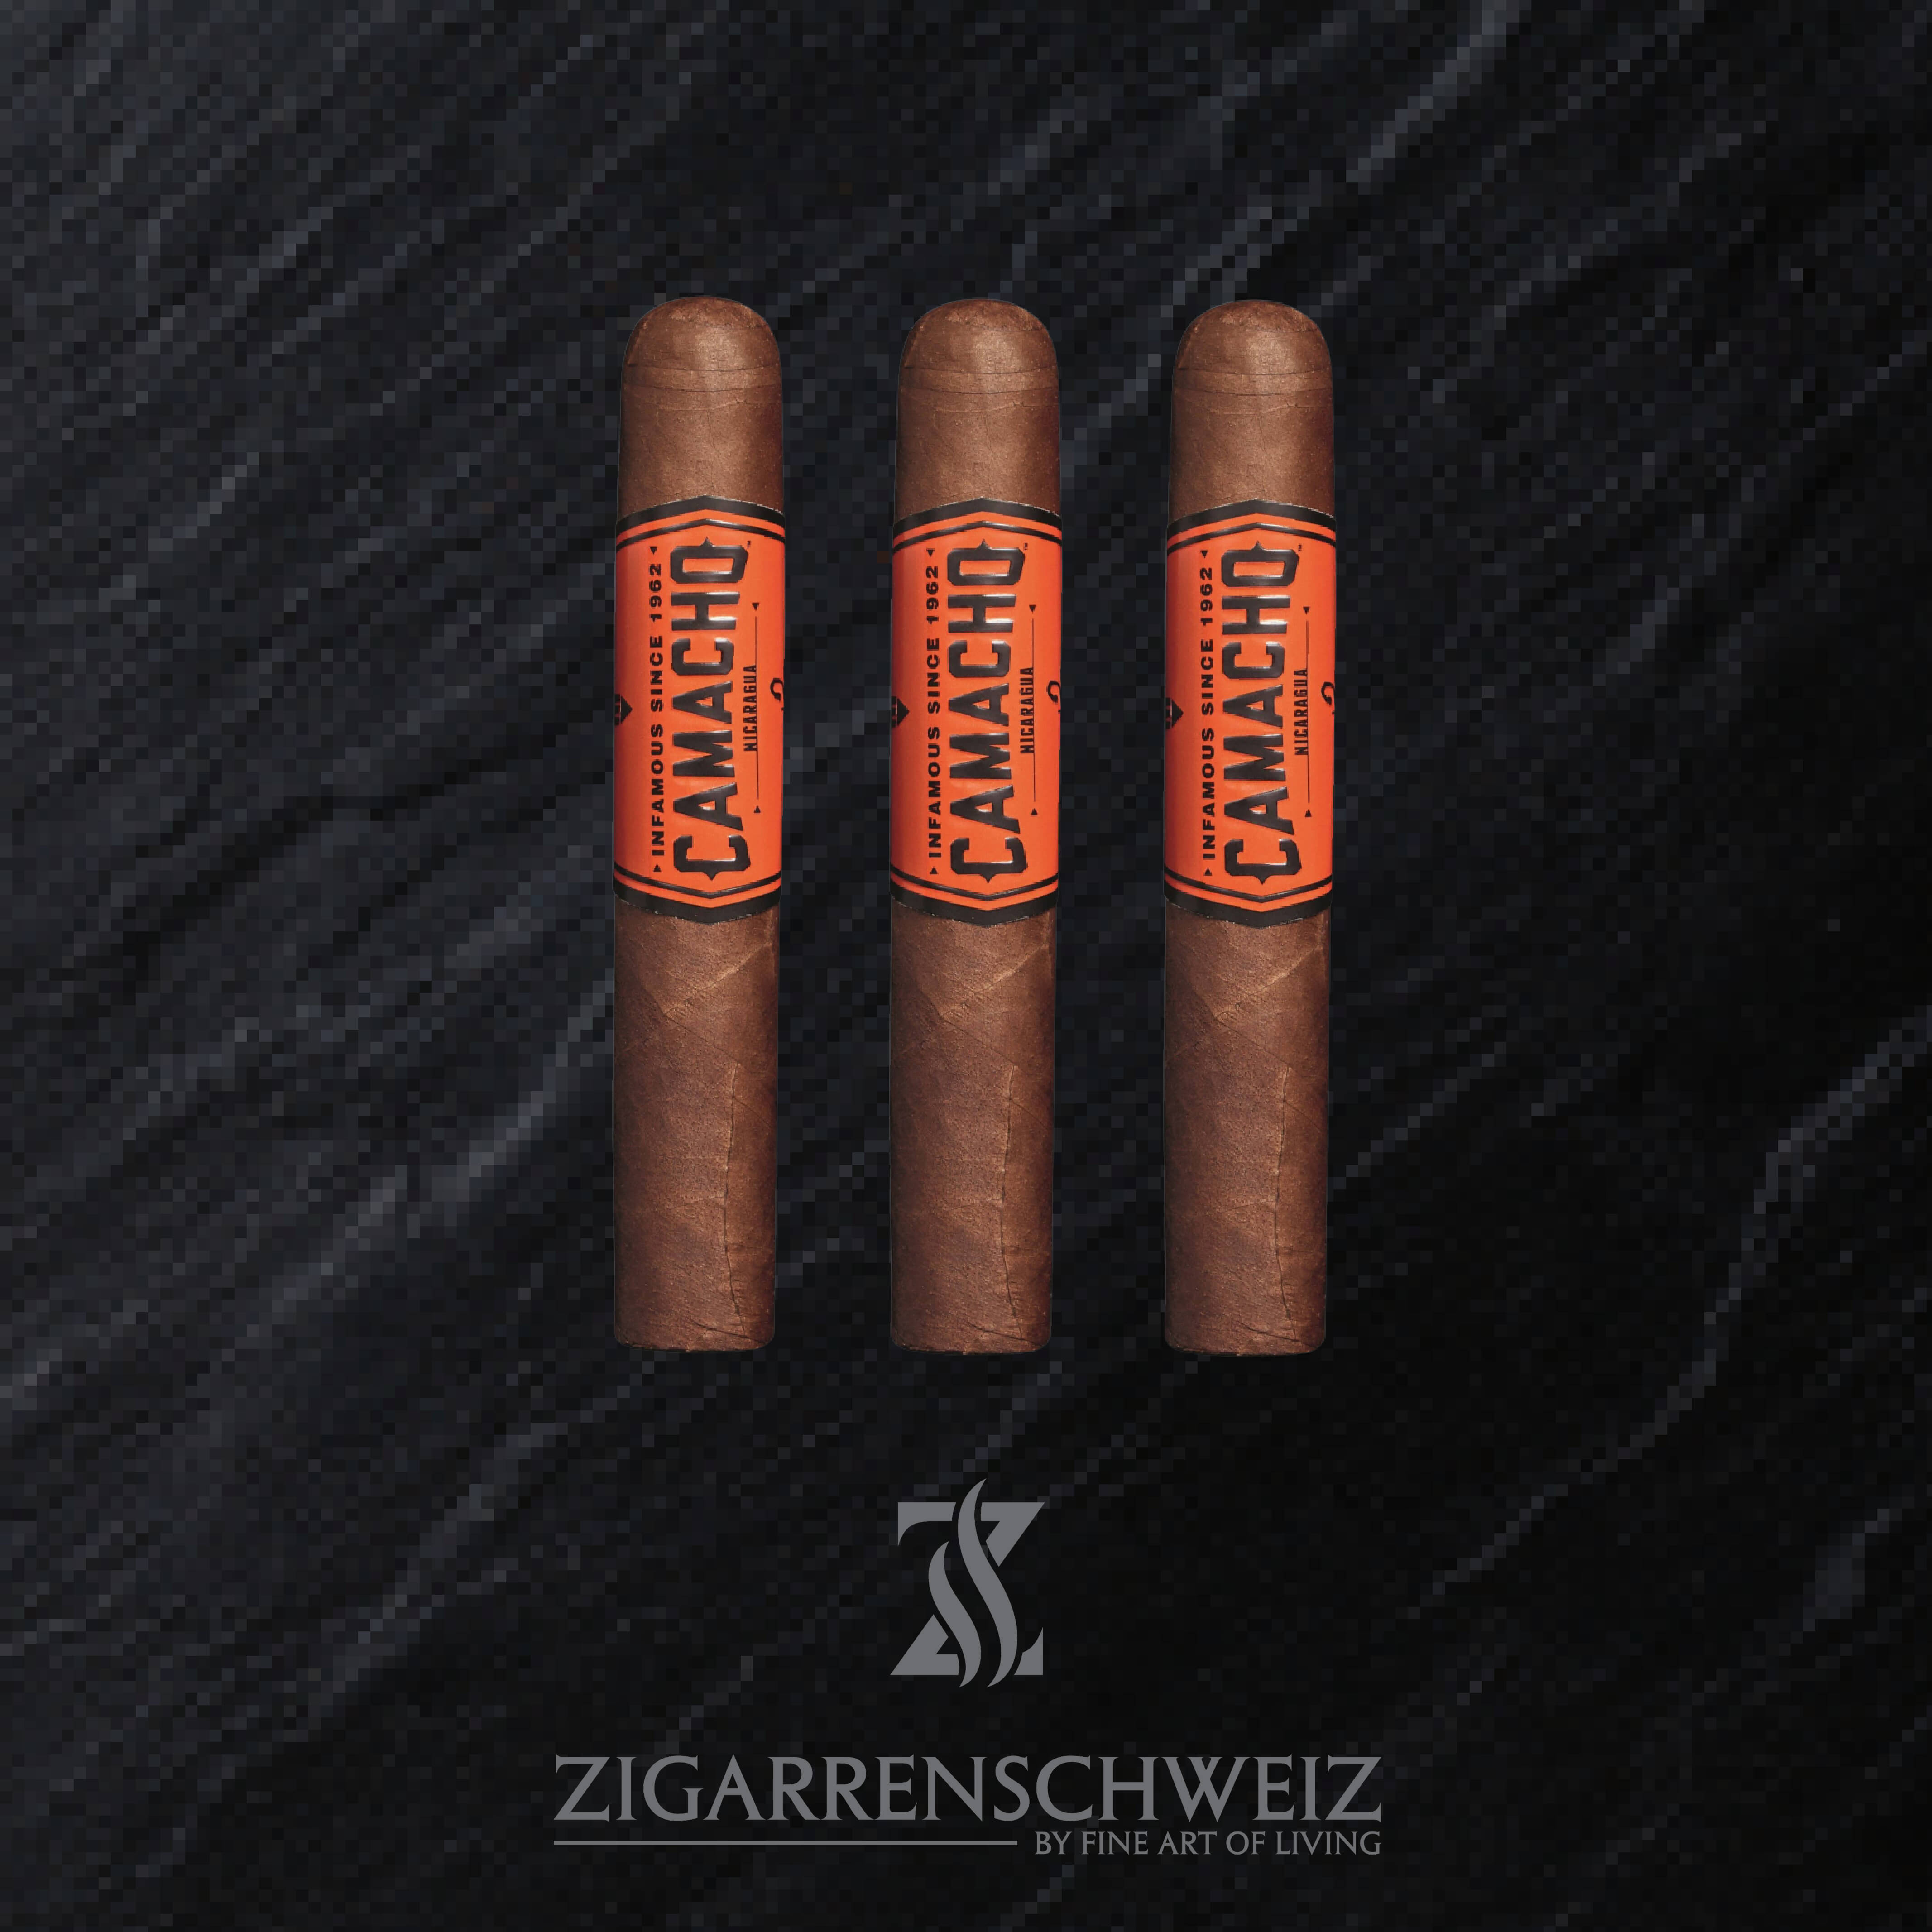 Camacho Nicaragua Robusto Zigarren Schweiz 3er Etui